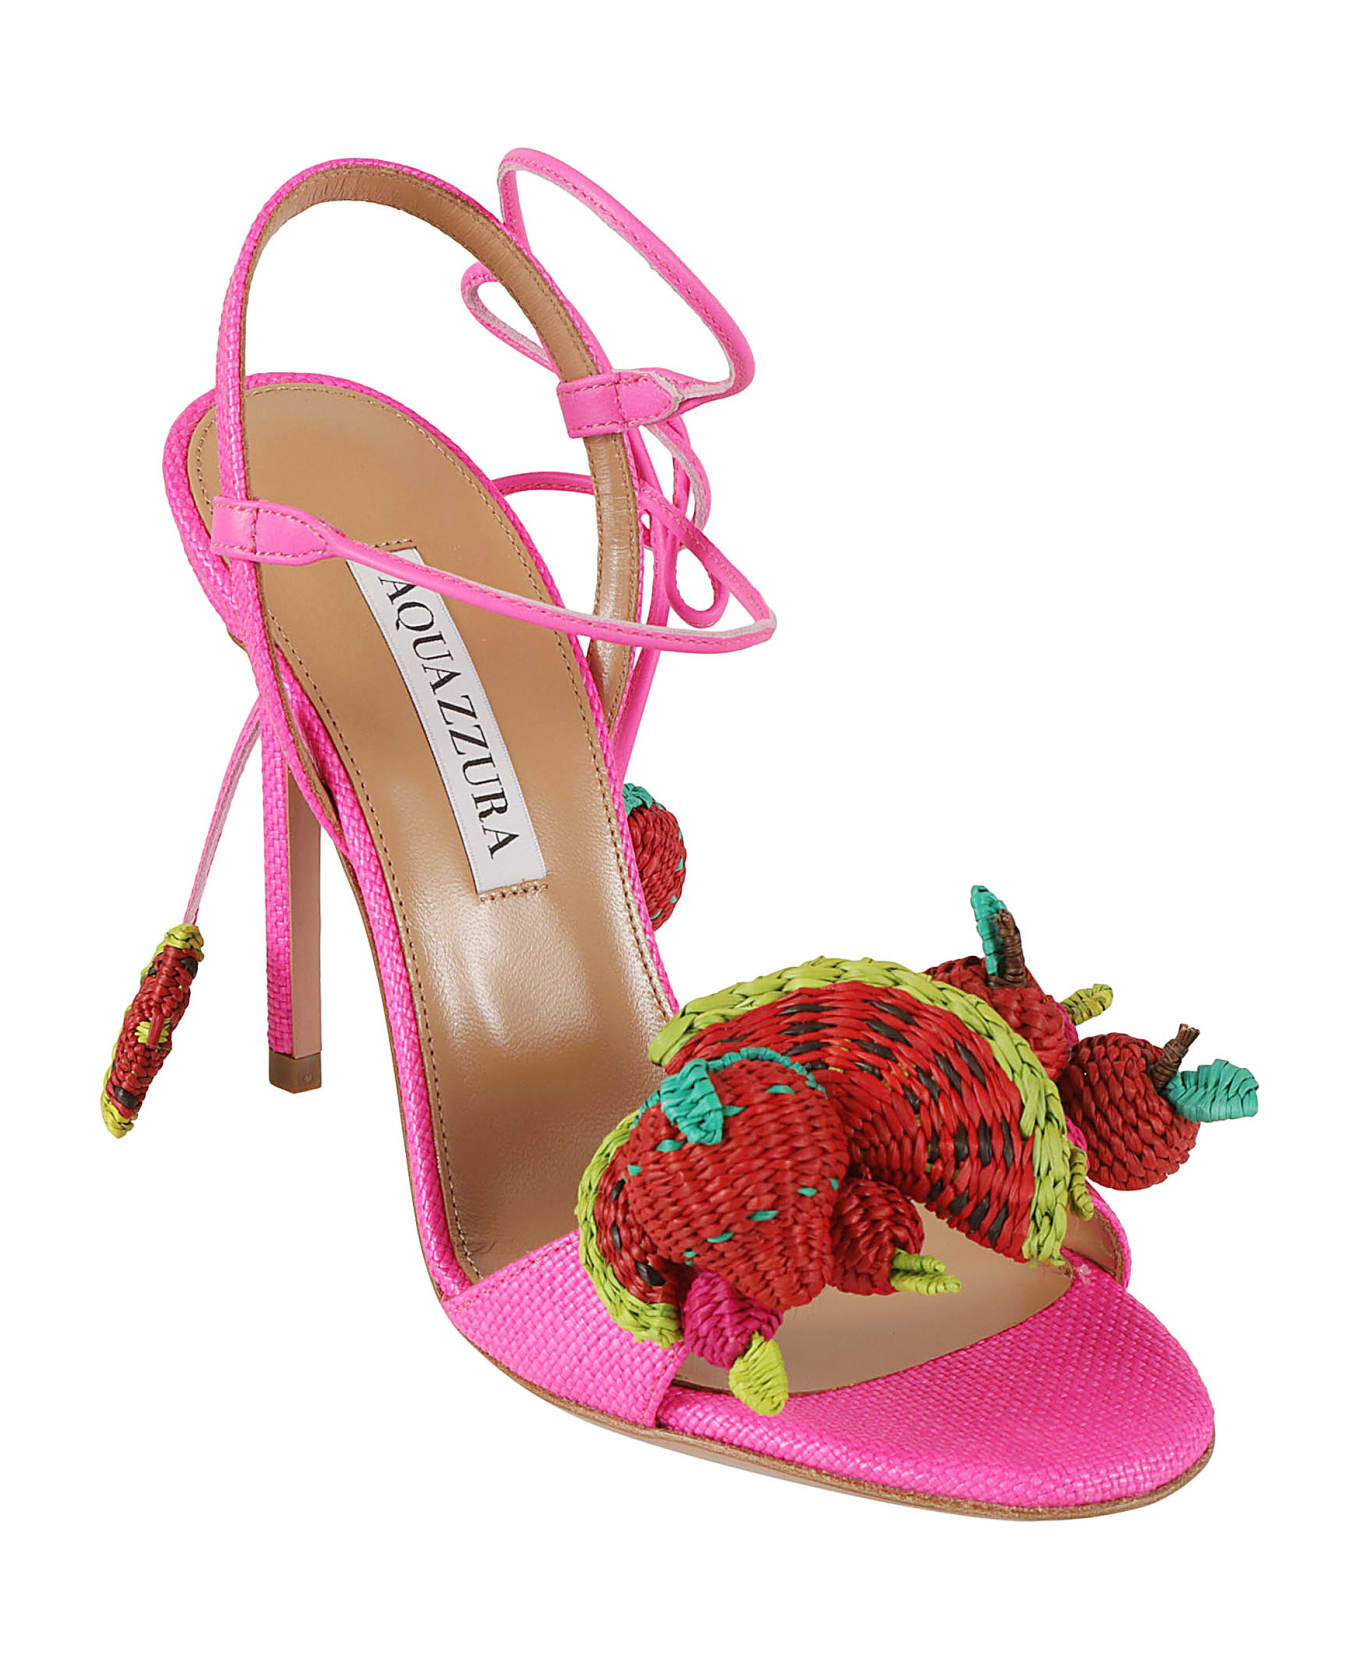 Aquazzura Strawberry Punch Sandals - Ultra Pink